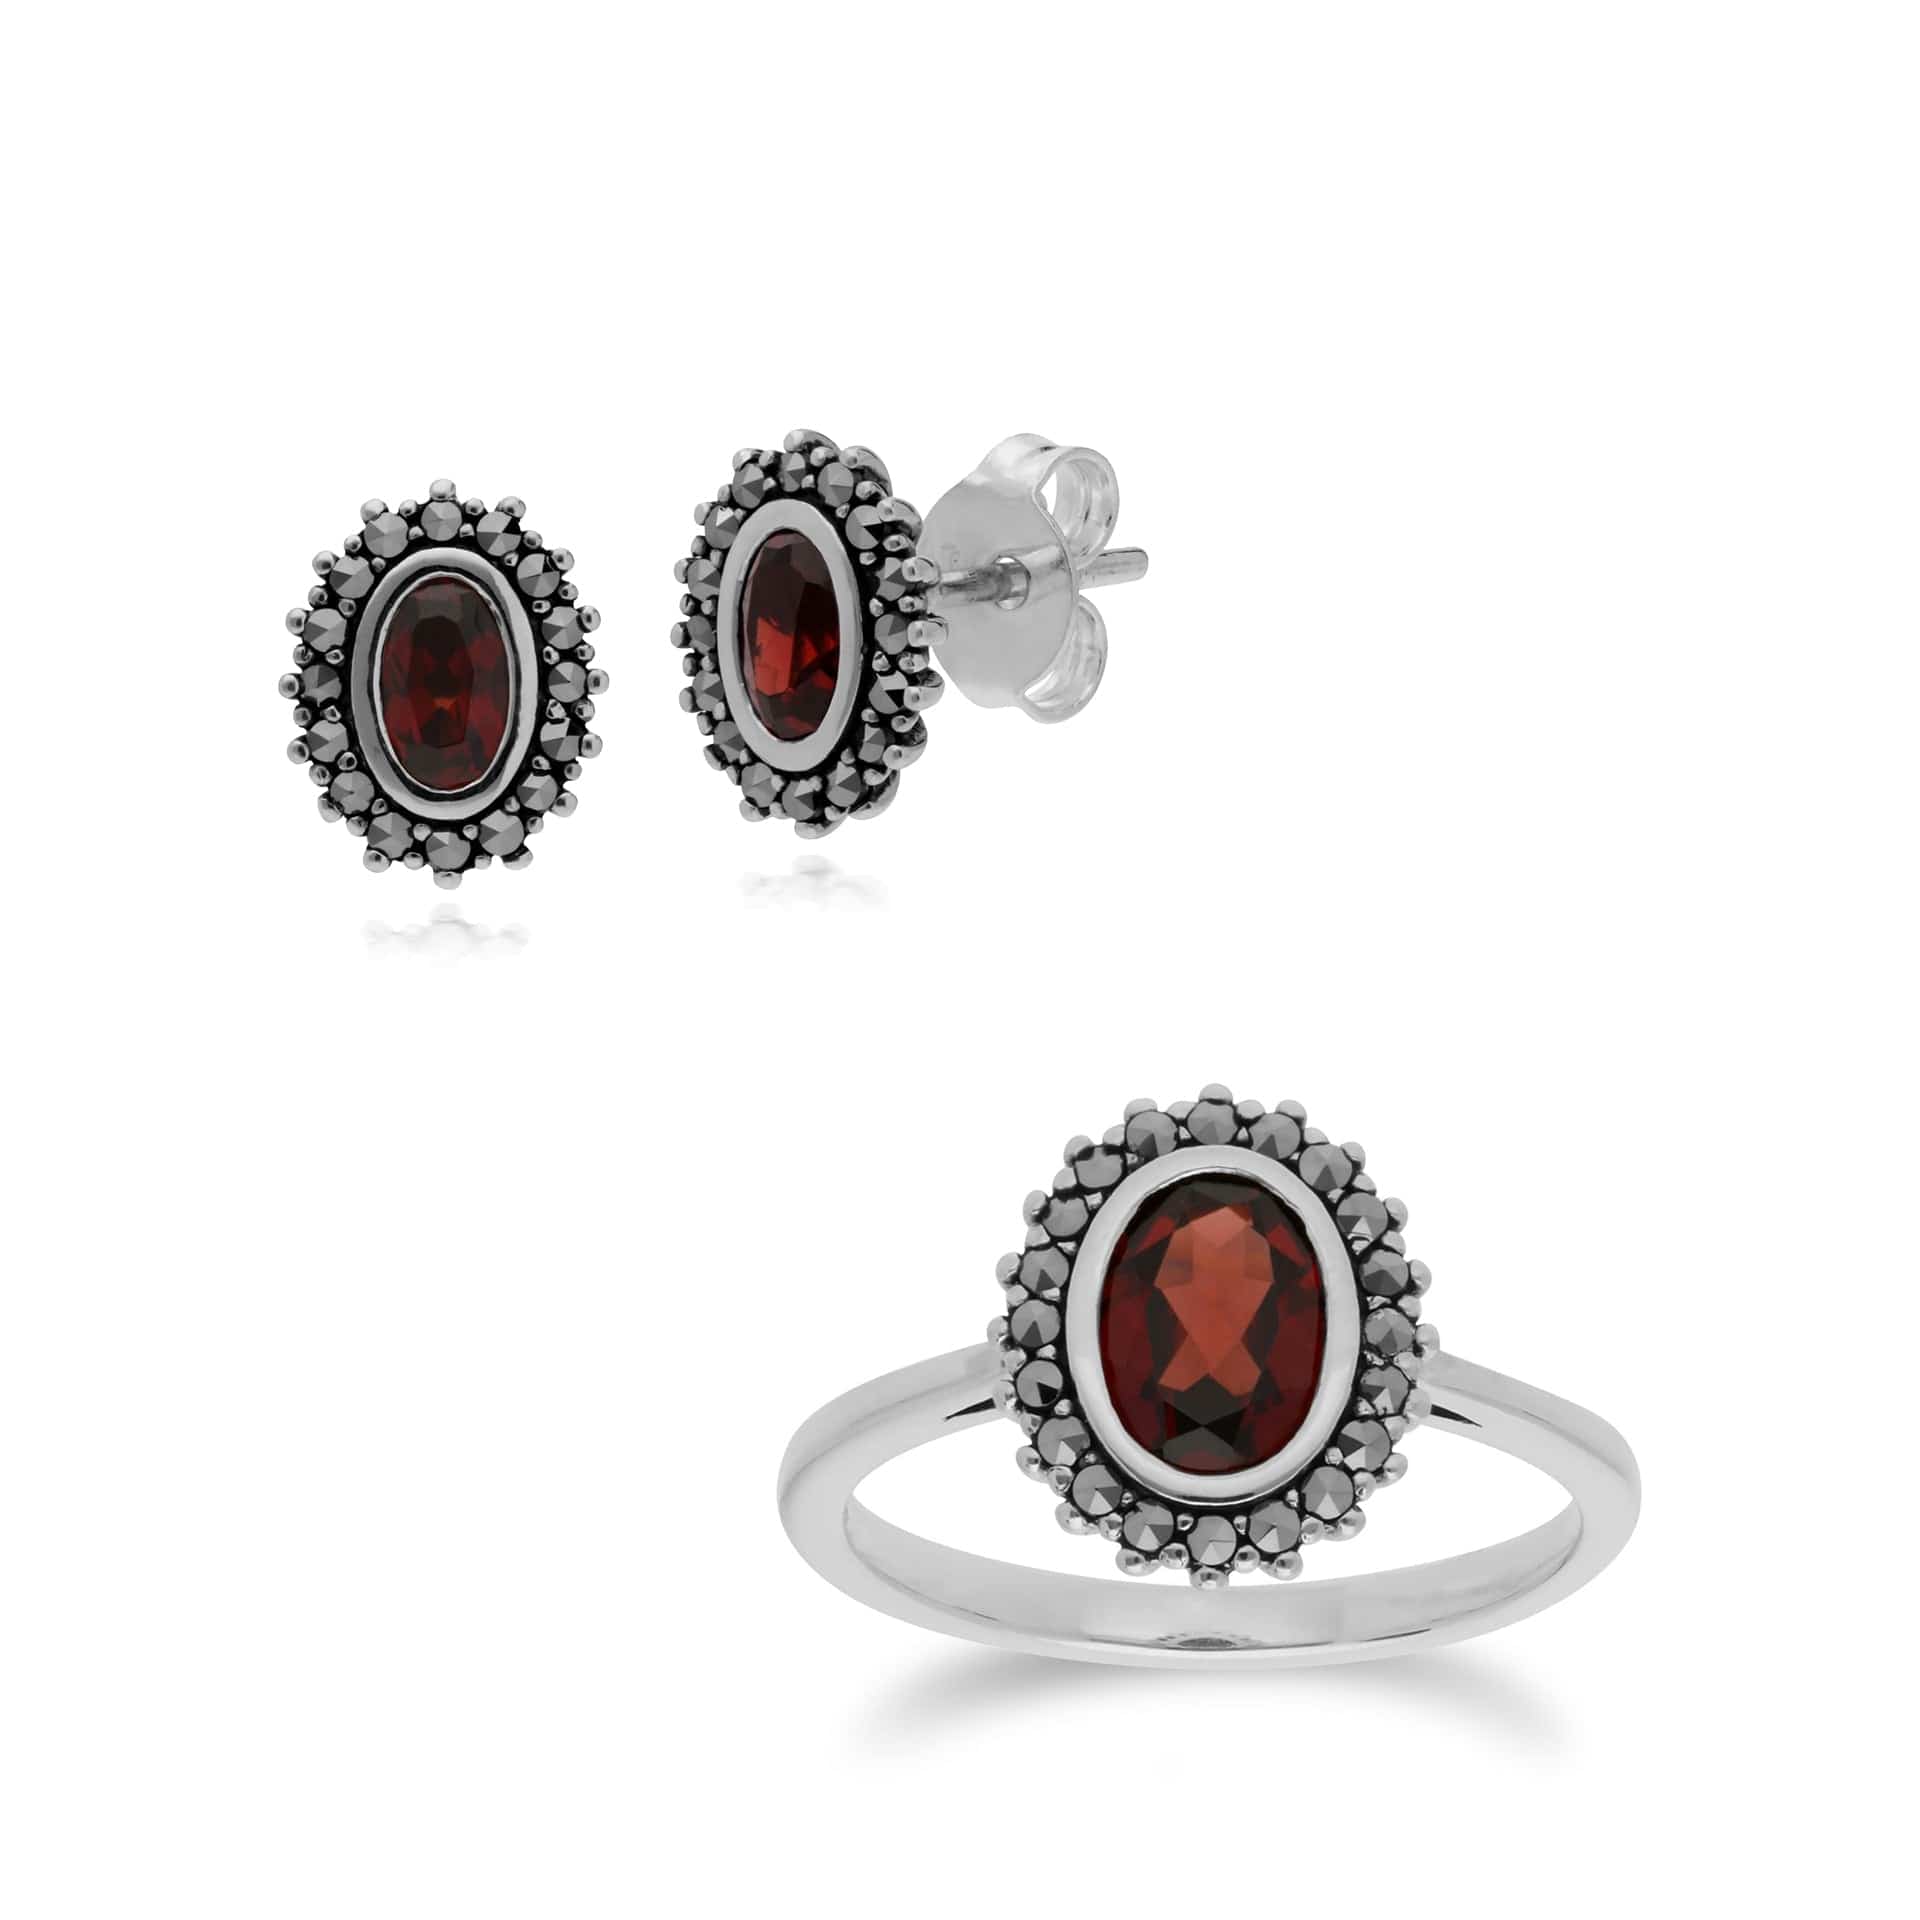 214E860903925-214R599703925 Art Deco Style Oval Garnet & Marcasite Halo Stud Earrings & Ring Set in 925 Sterling Silver 1